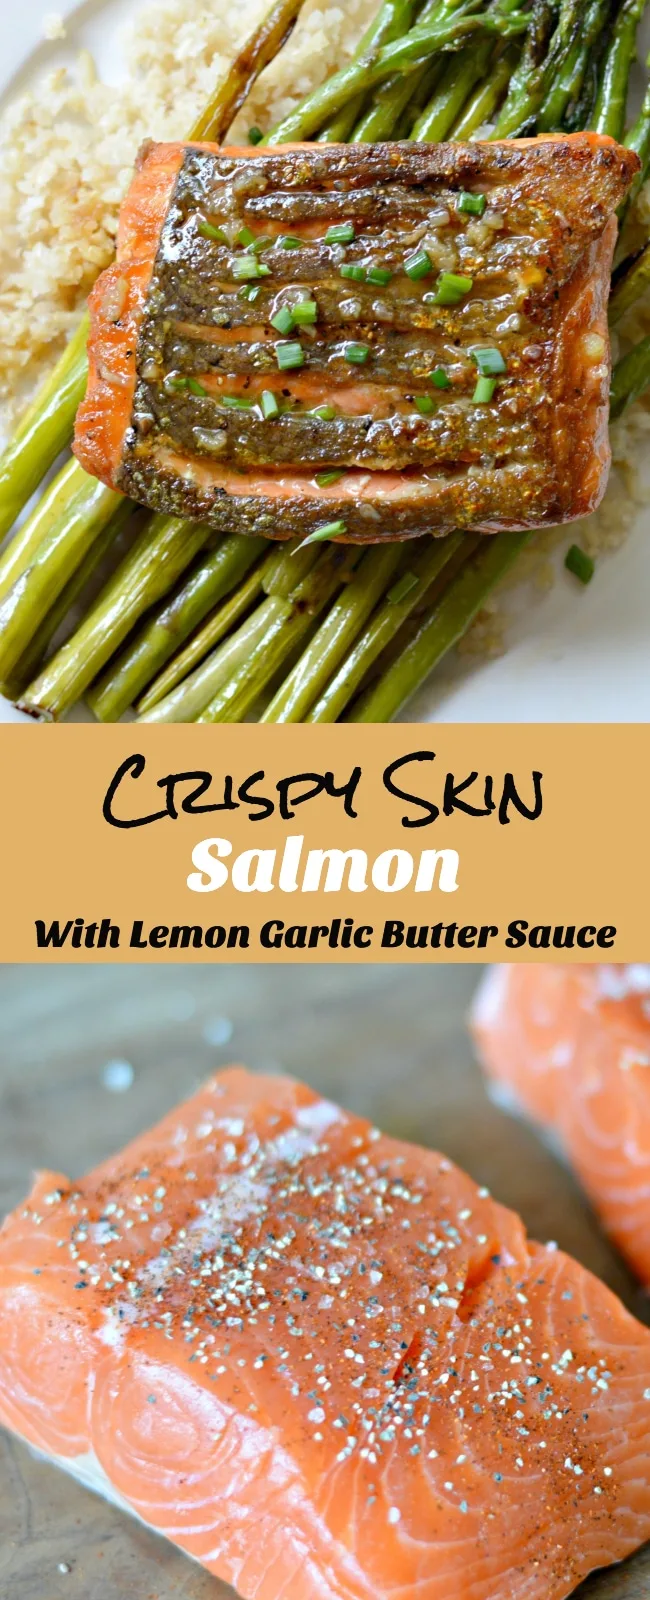 Keep reading to find out how to make a tasty crispy skin salmon with lemon garlic sauce using delicious Alaska king salmon #AskForAlaska